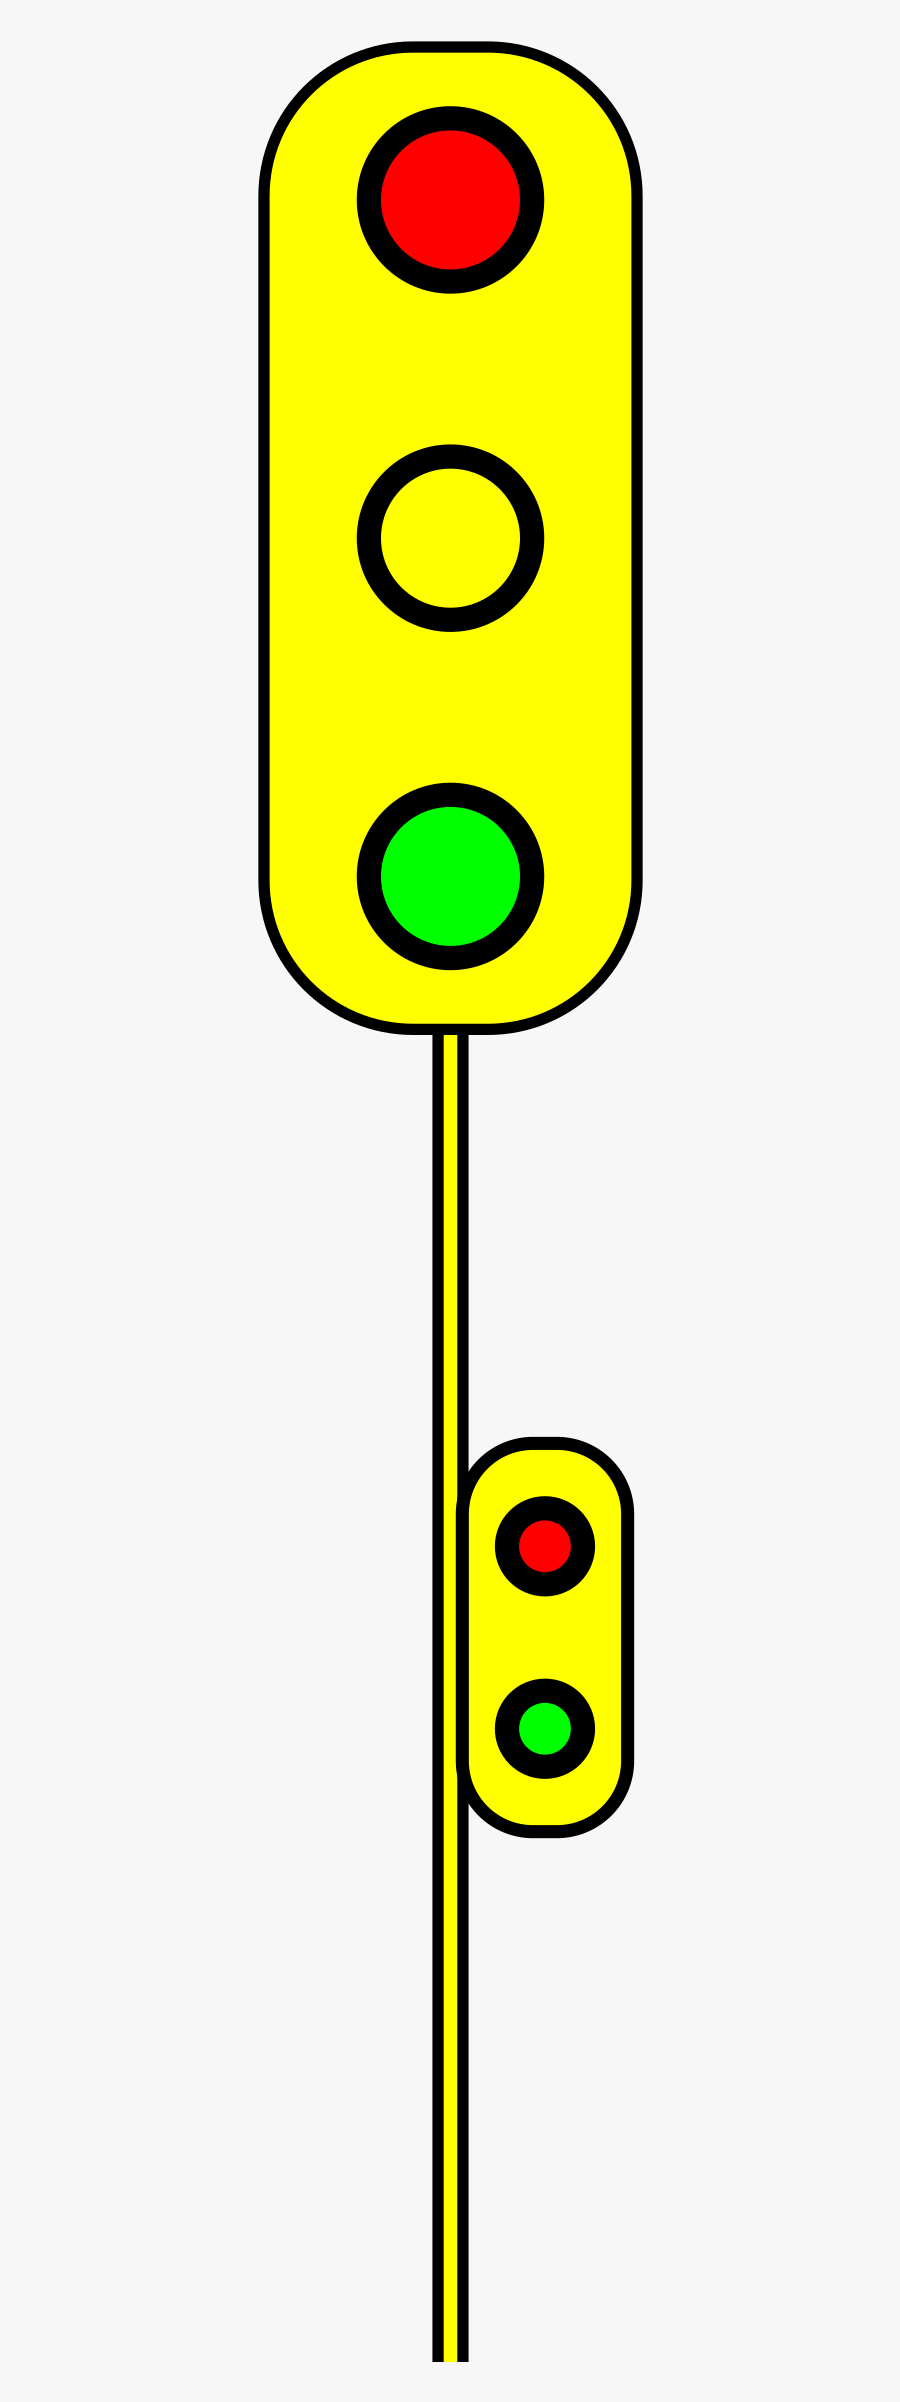 Traffic Light Clipart Small - Traffic Light, Transparent Clipart